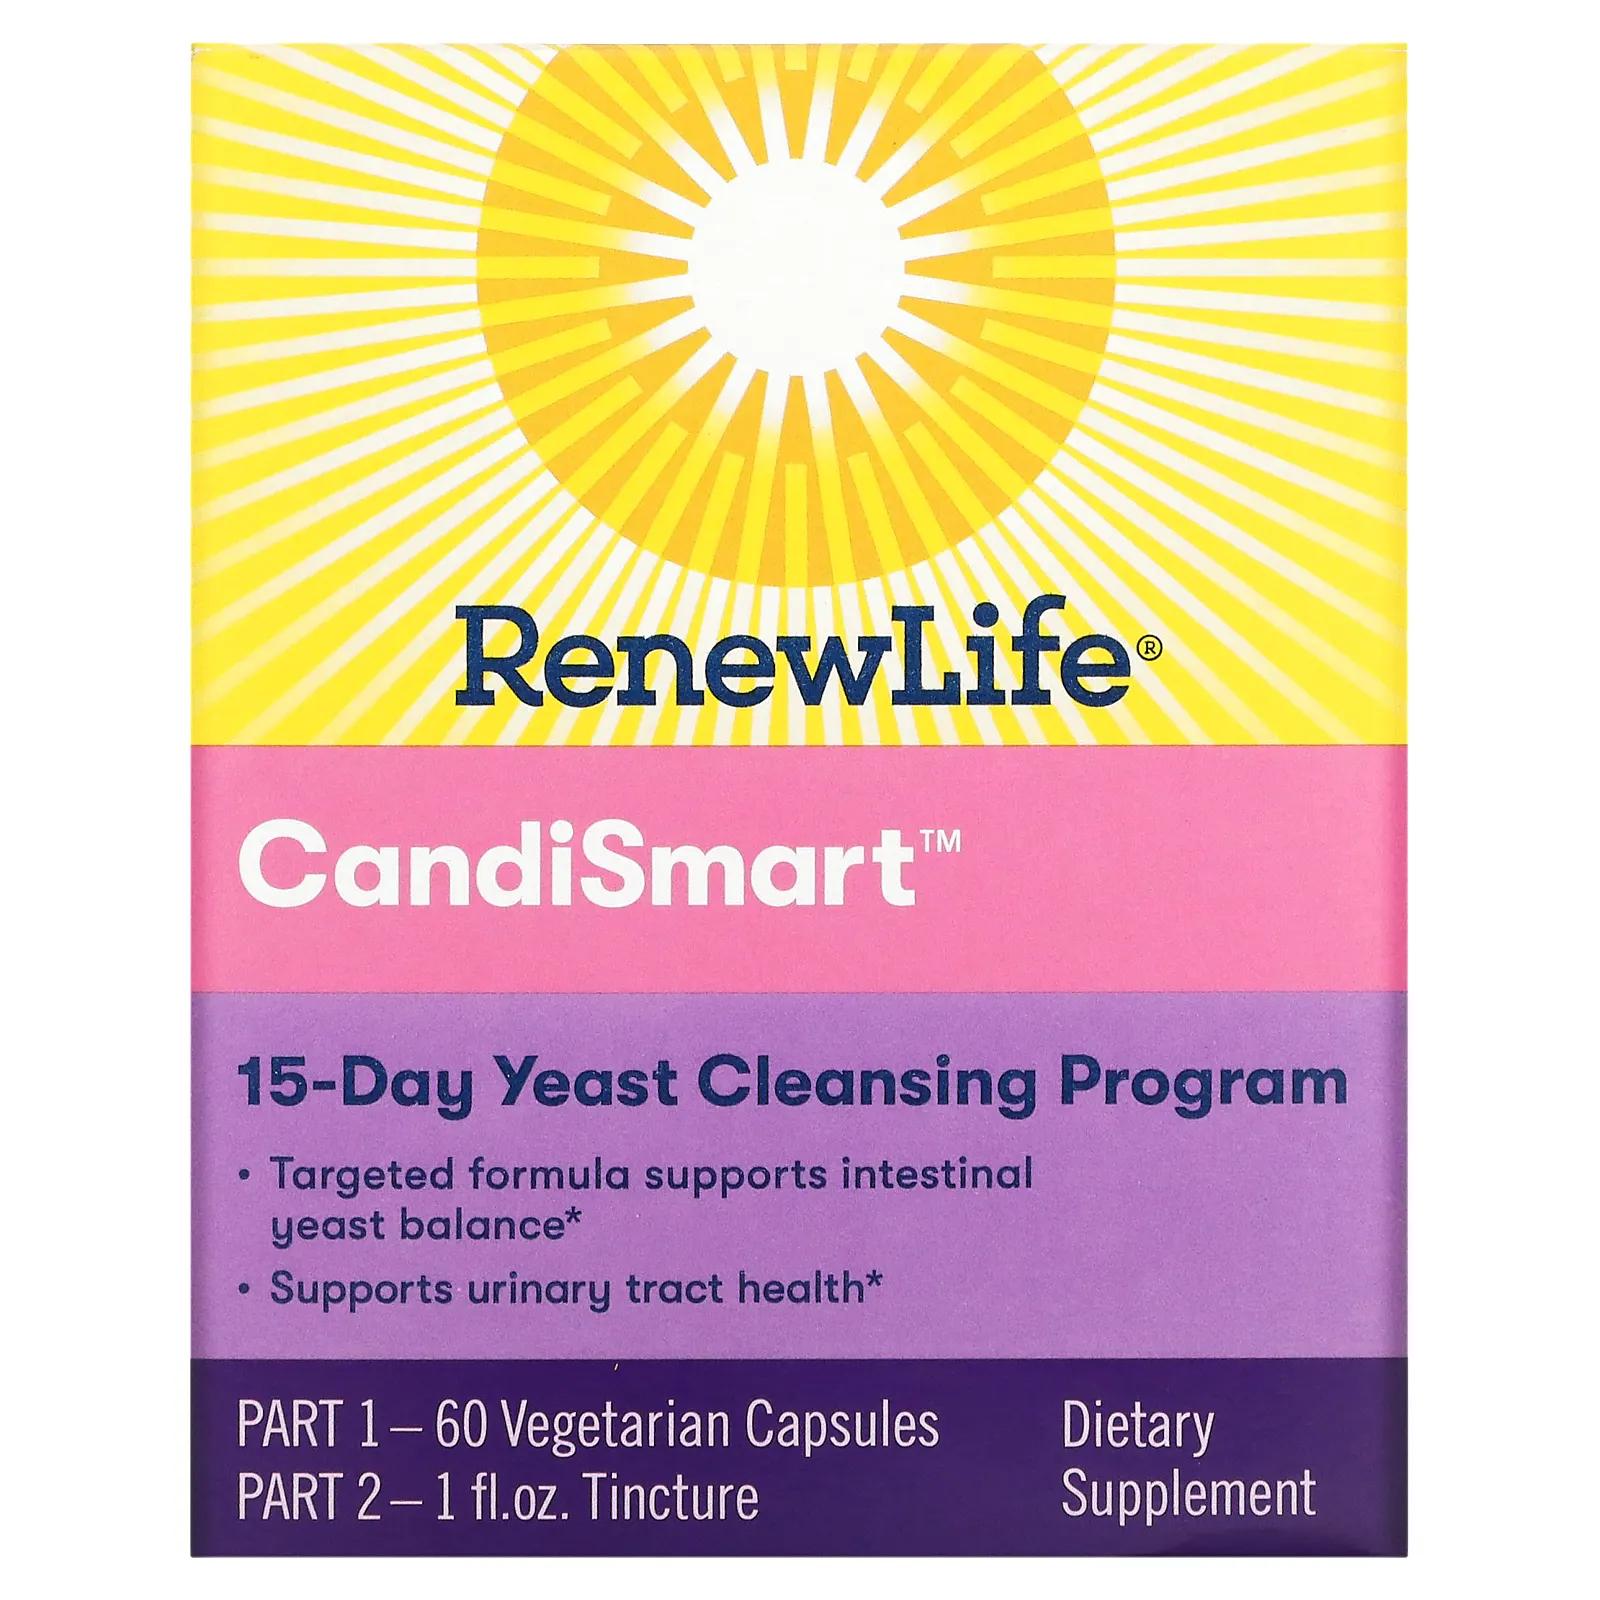 цена Renew Life Целевая Candi Smart очищающая дрожжевая формула 15-дневная программа 2-компонентная программа